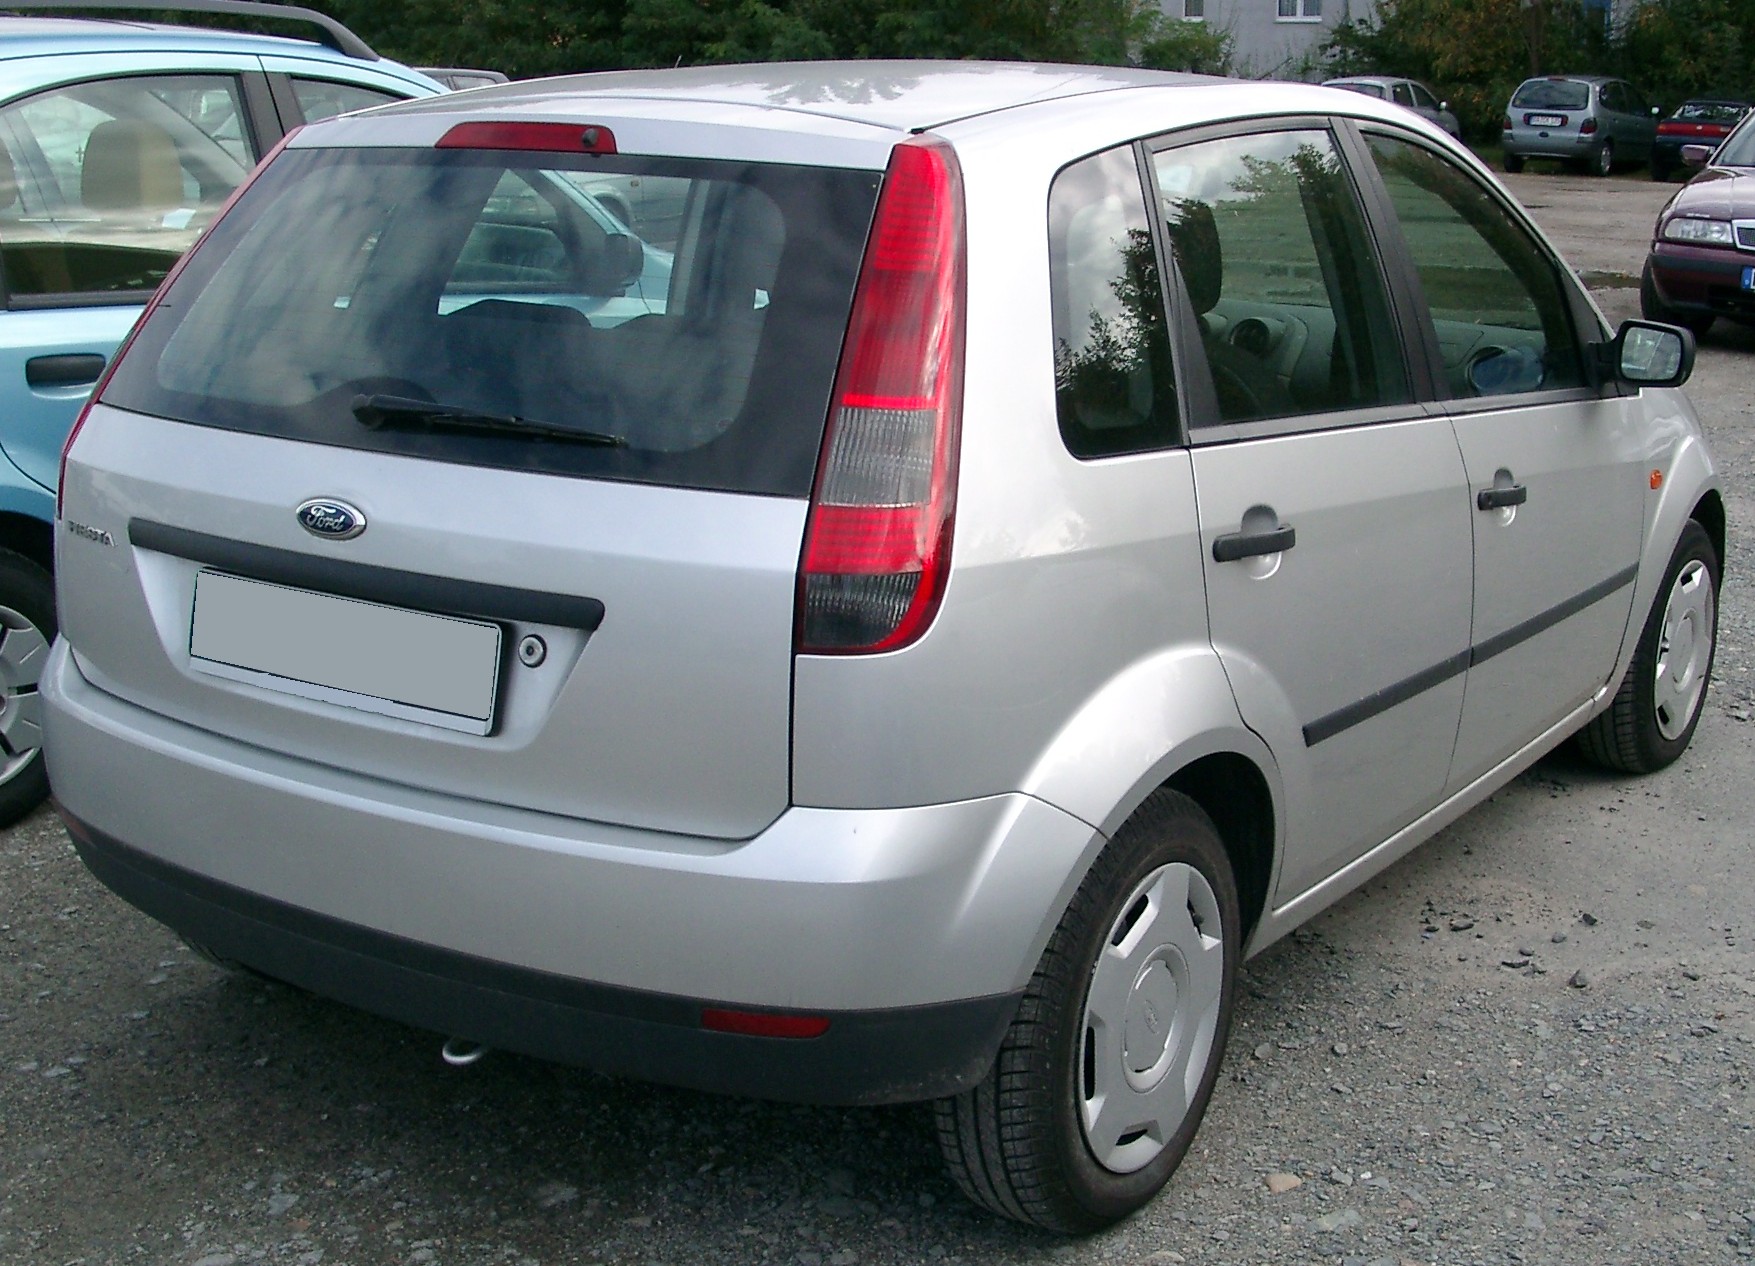 https://upload.wikimedia.org/wikipedia/commons/d/d6/Ford_Fiesta_MK6_rear_20070926.jpg